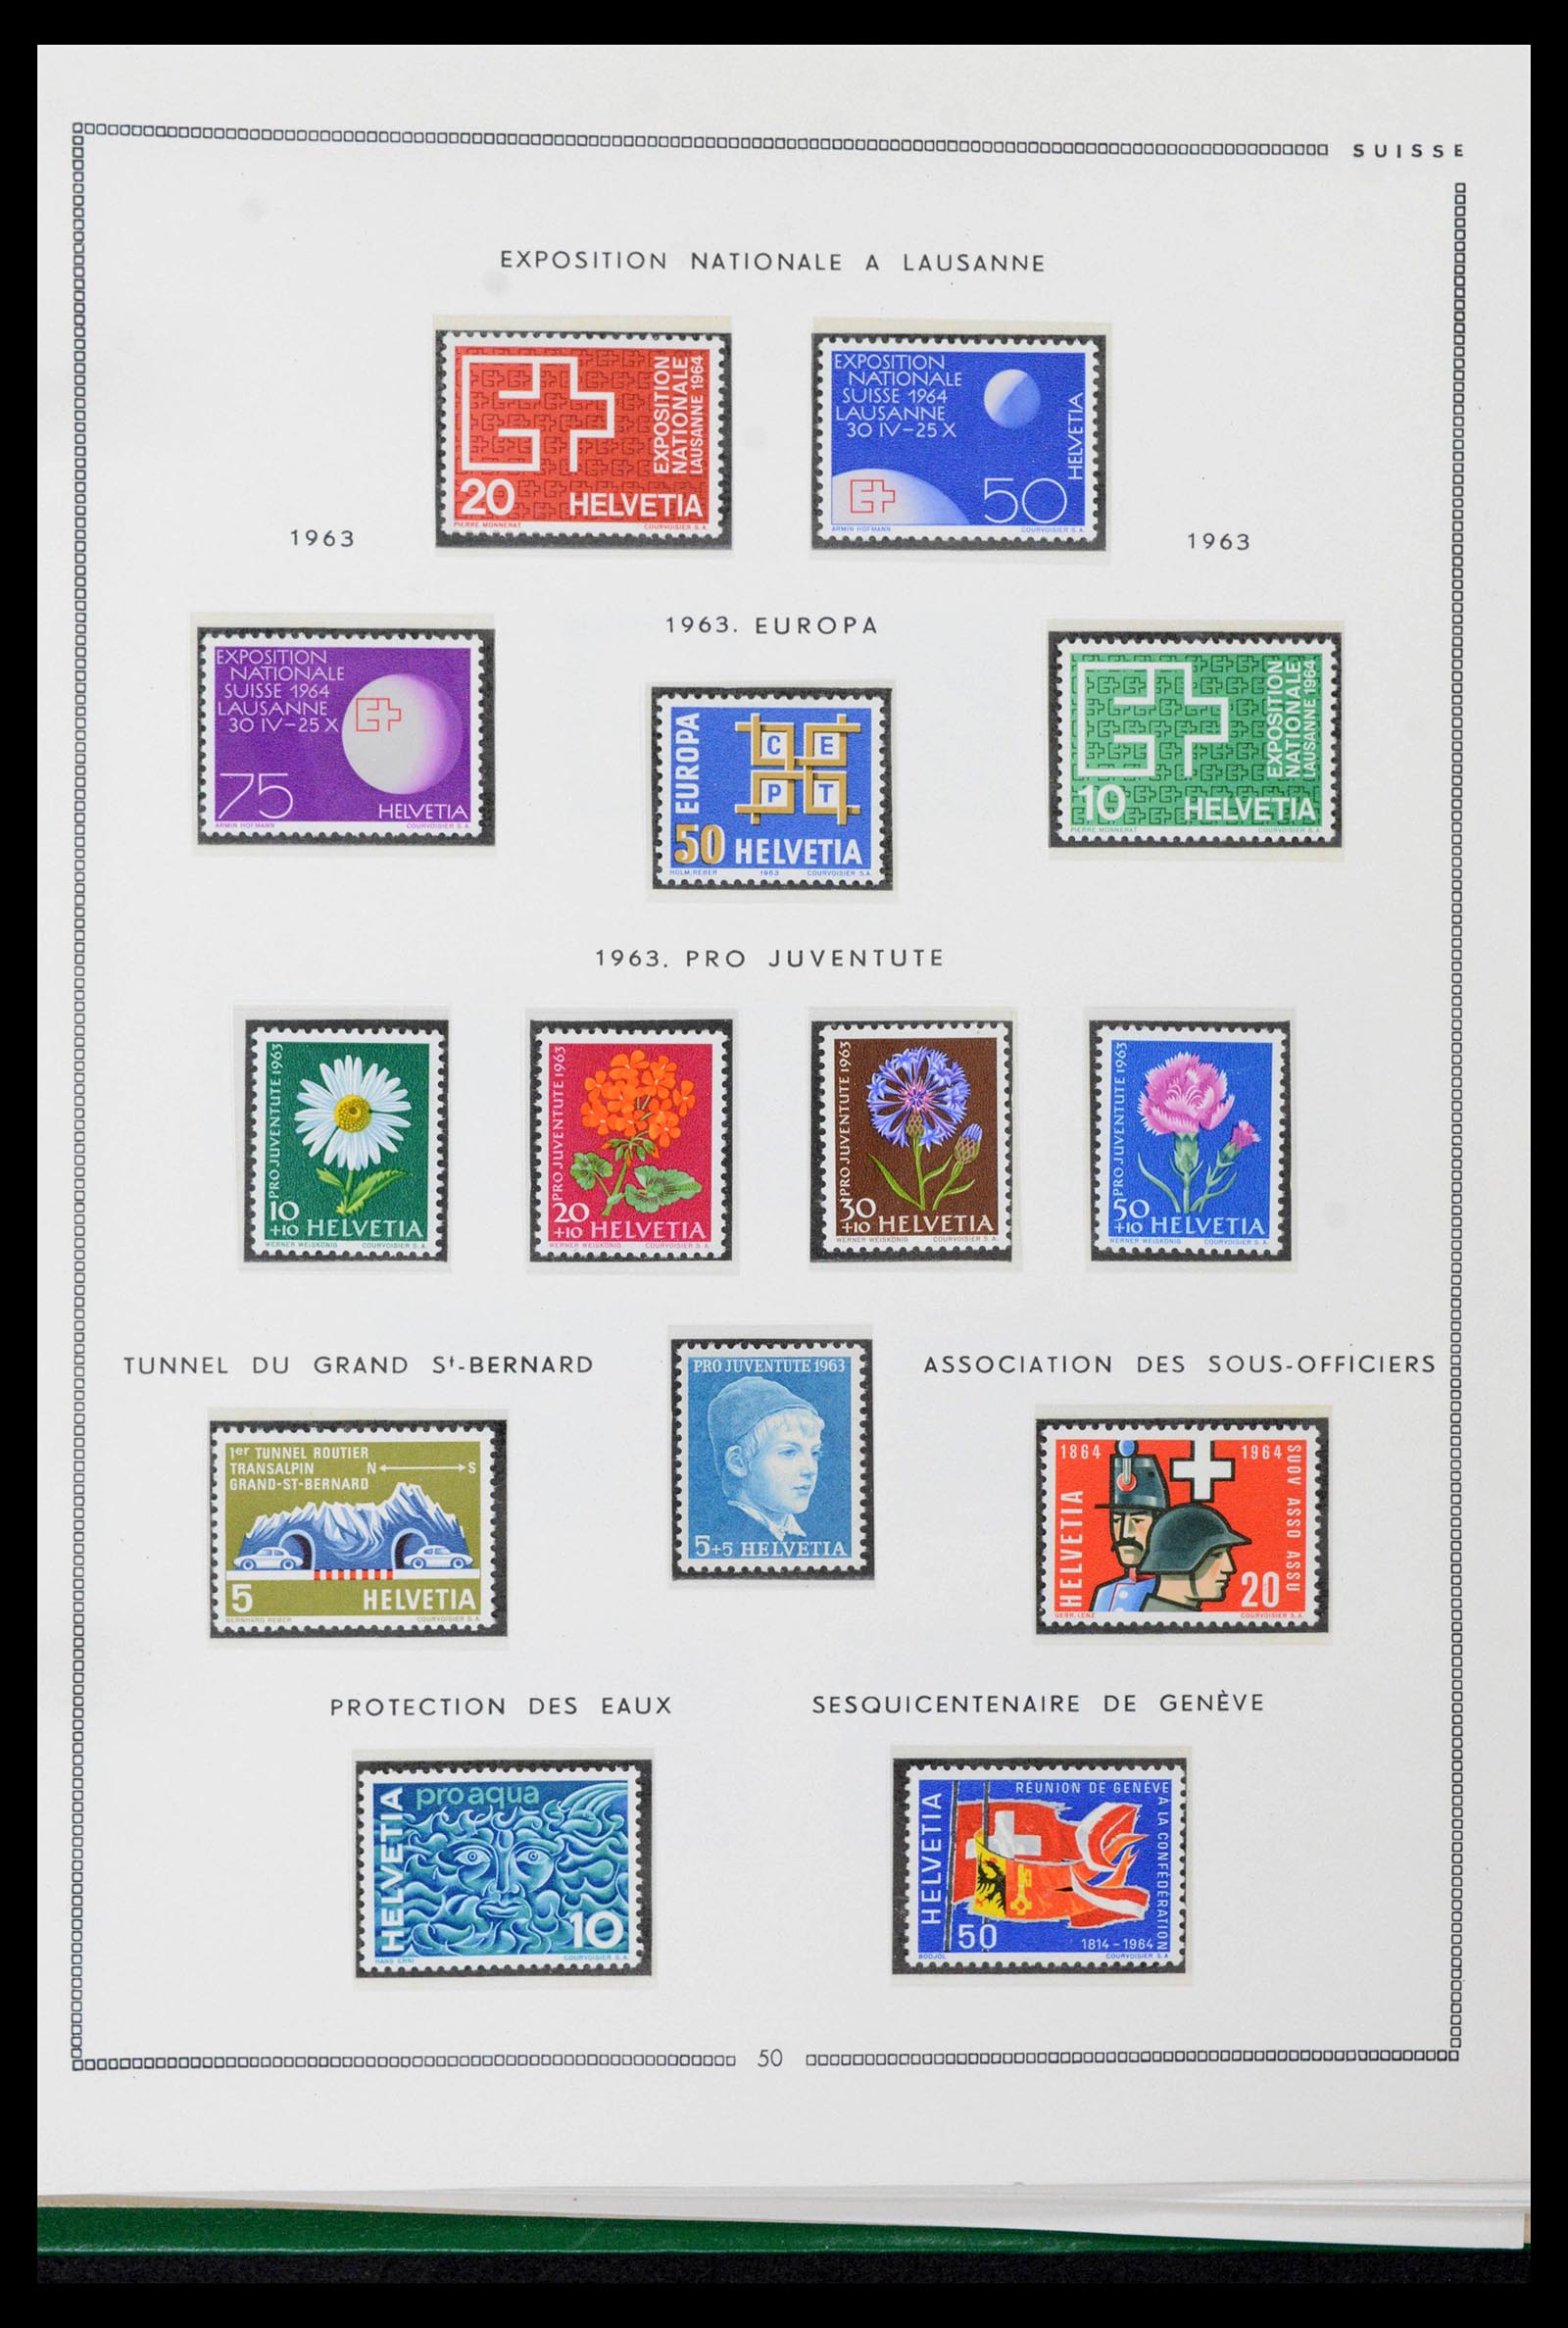 39096 0045 - Stamp collection 39096 Switzerland 1907-1963.